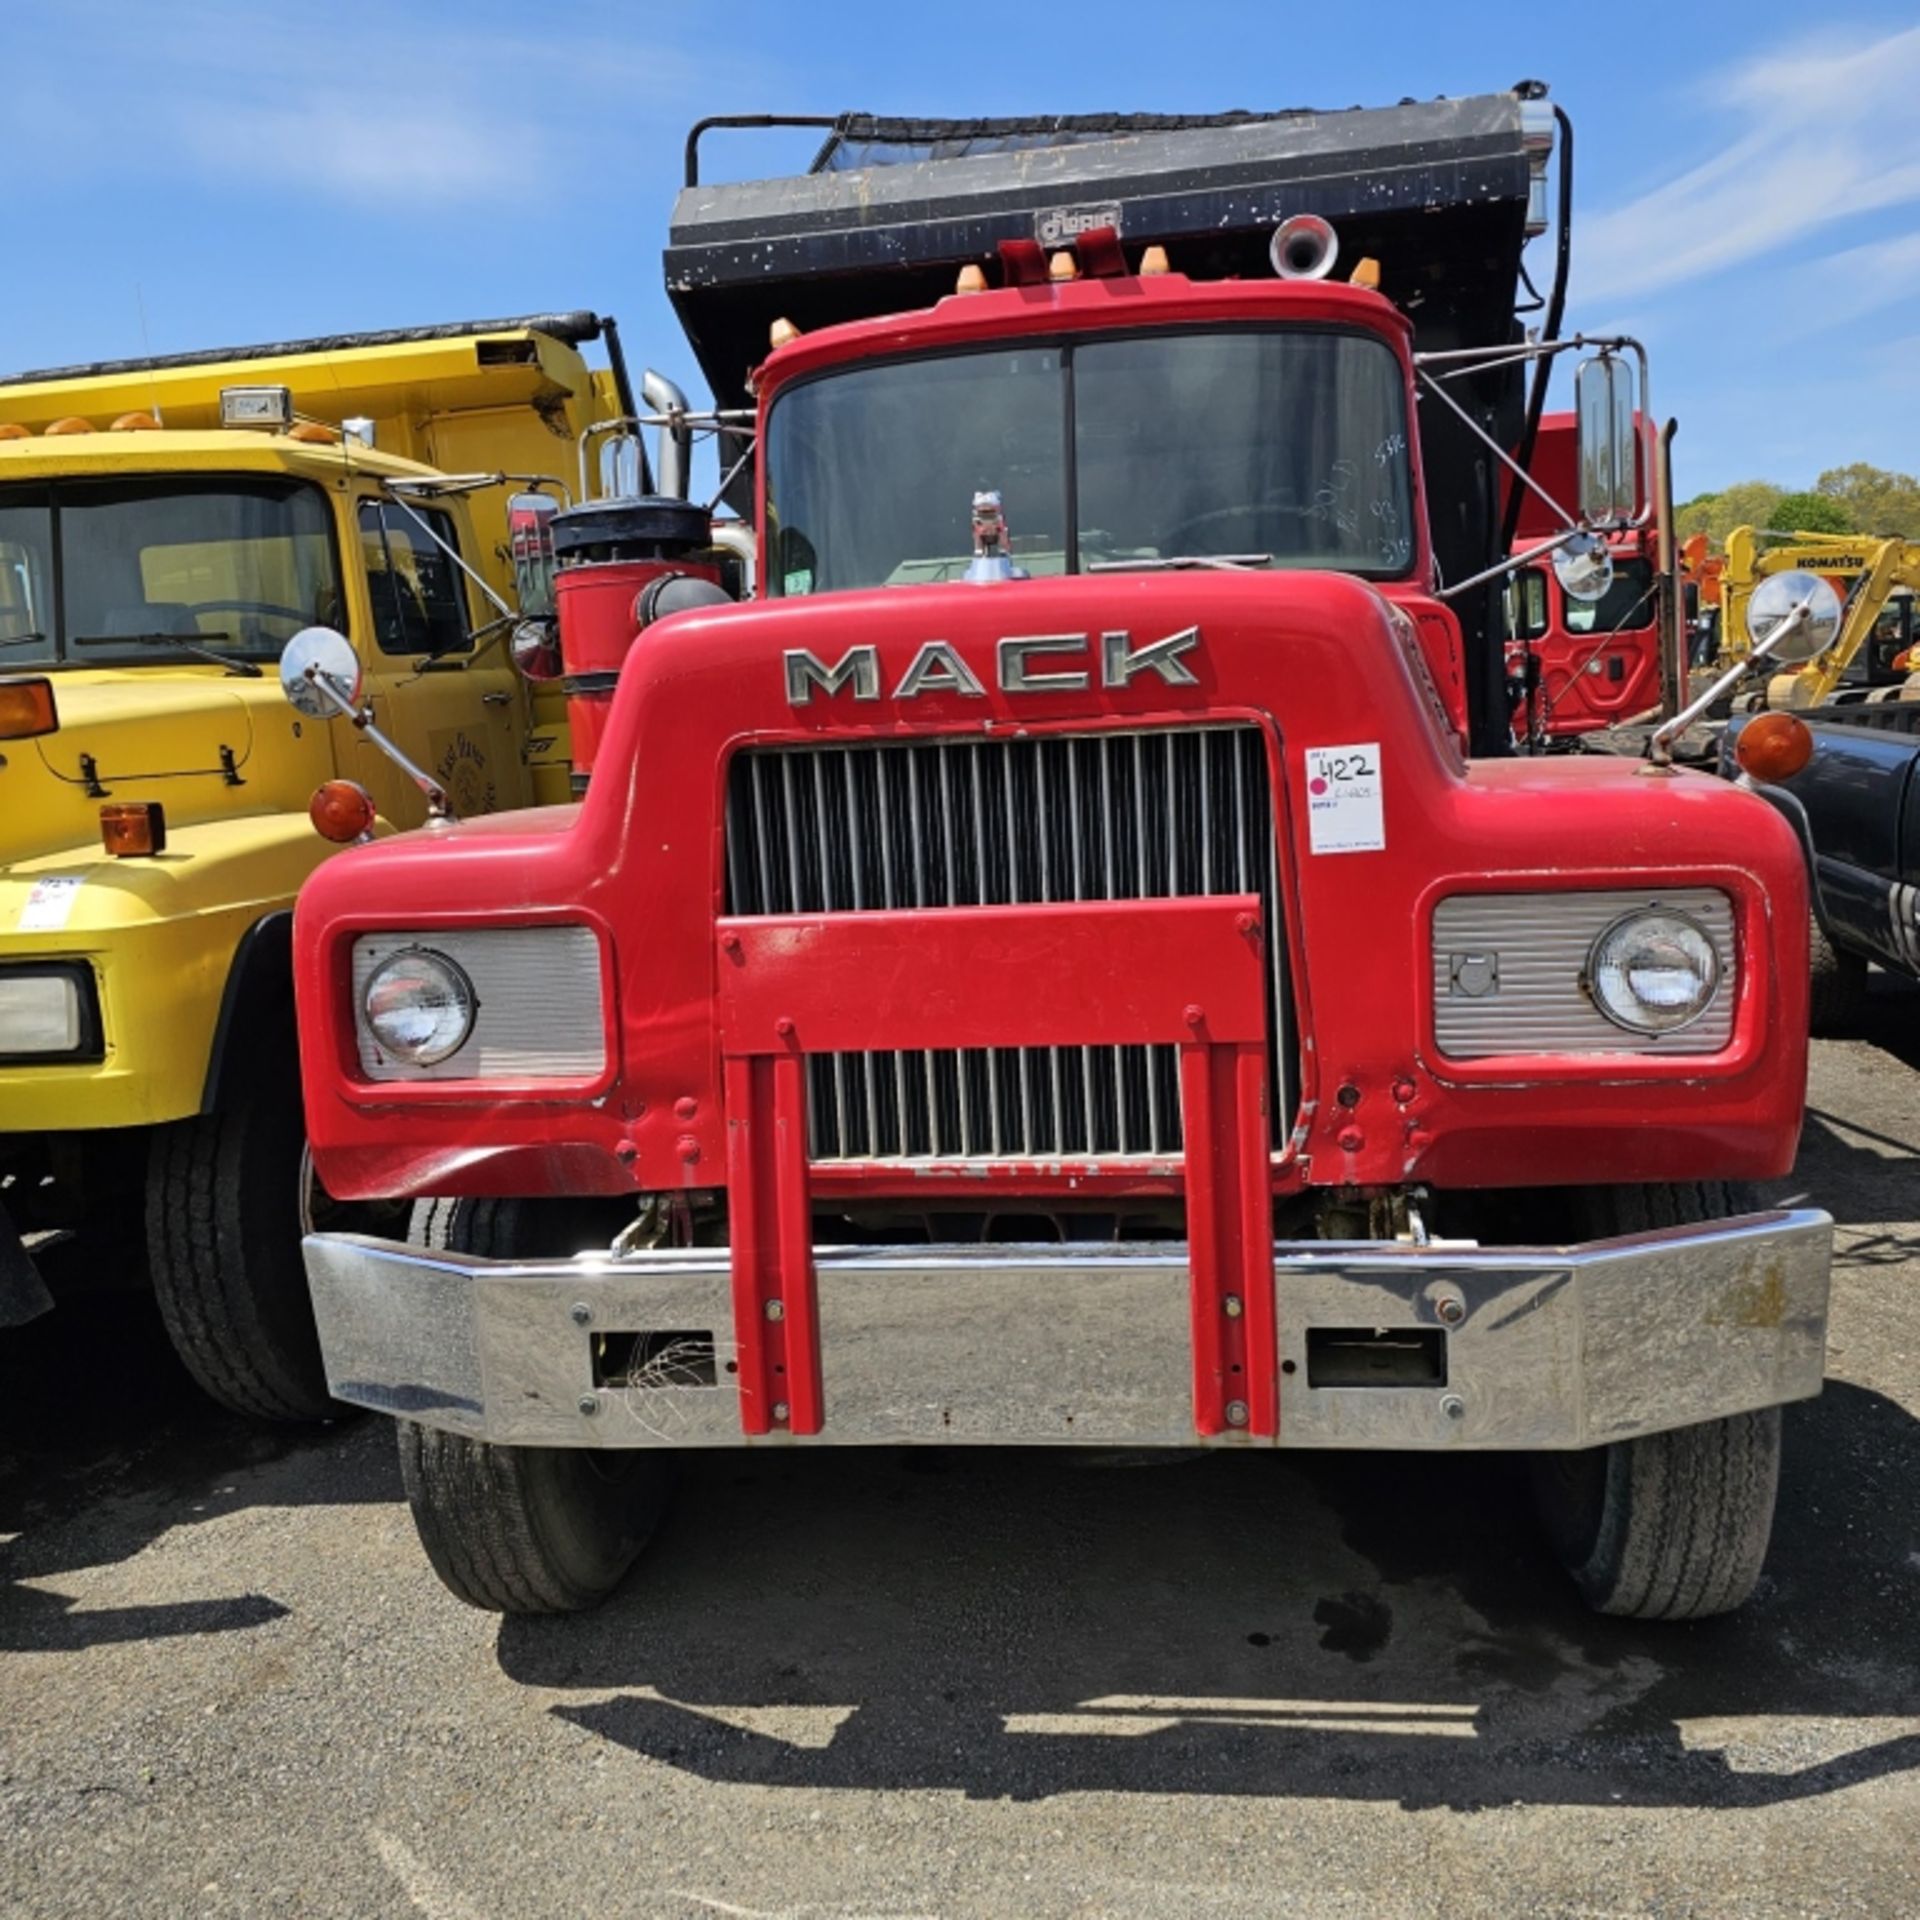 Mack Rd686s Triaxle Dump Truck - Image 3 of 12